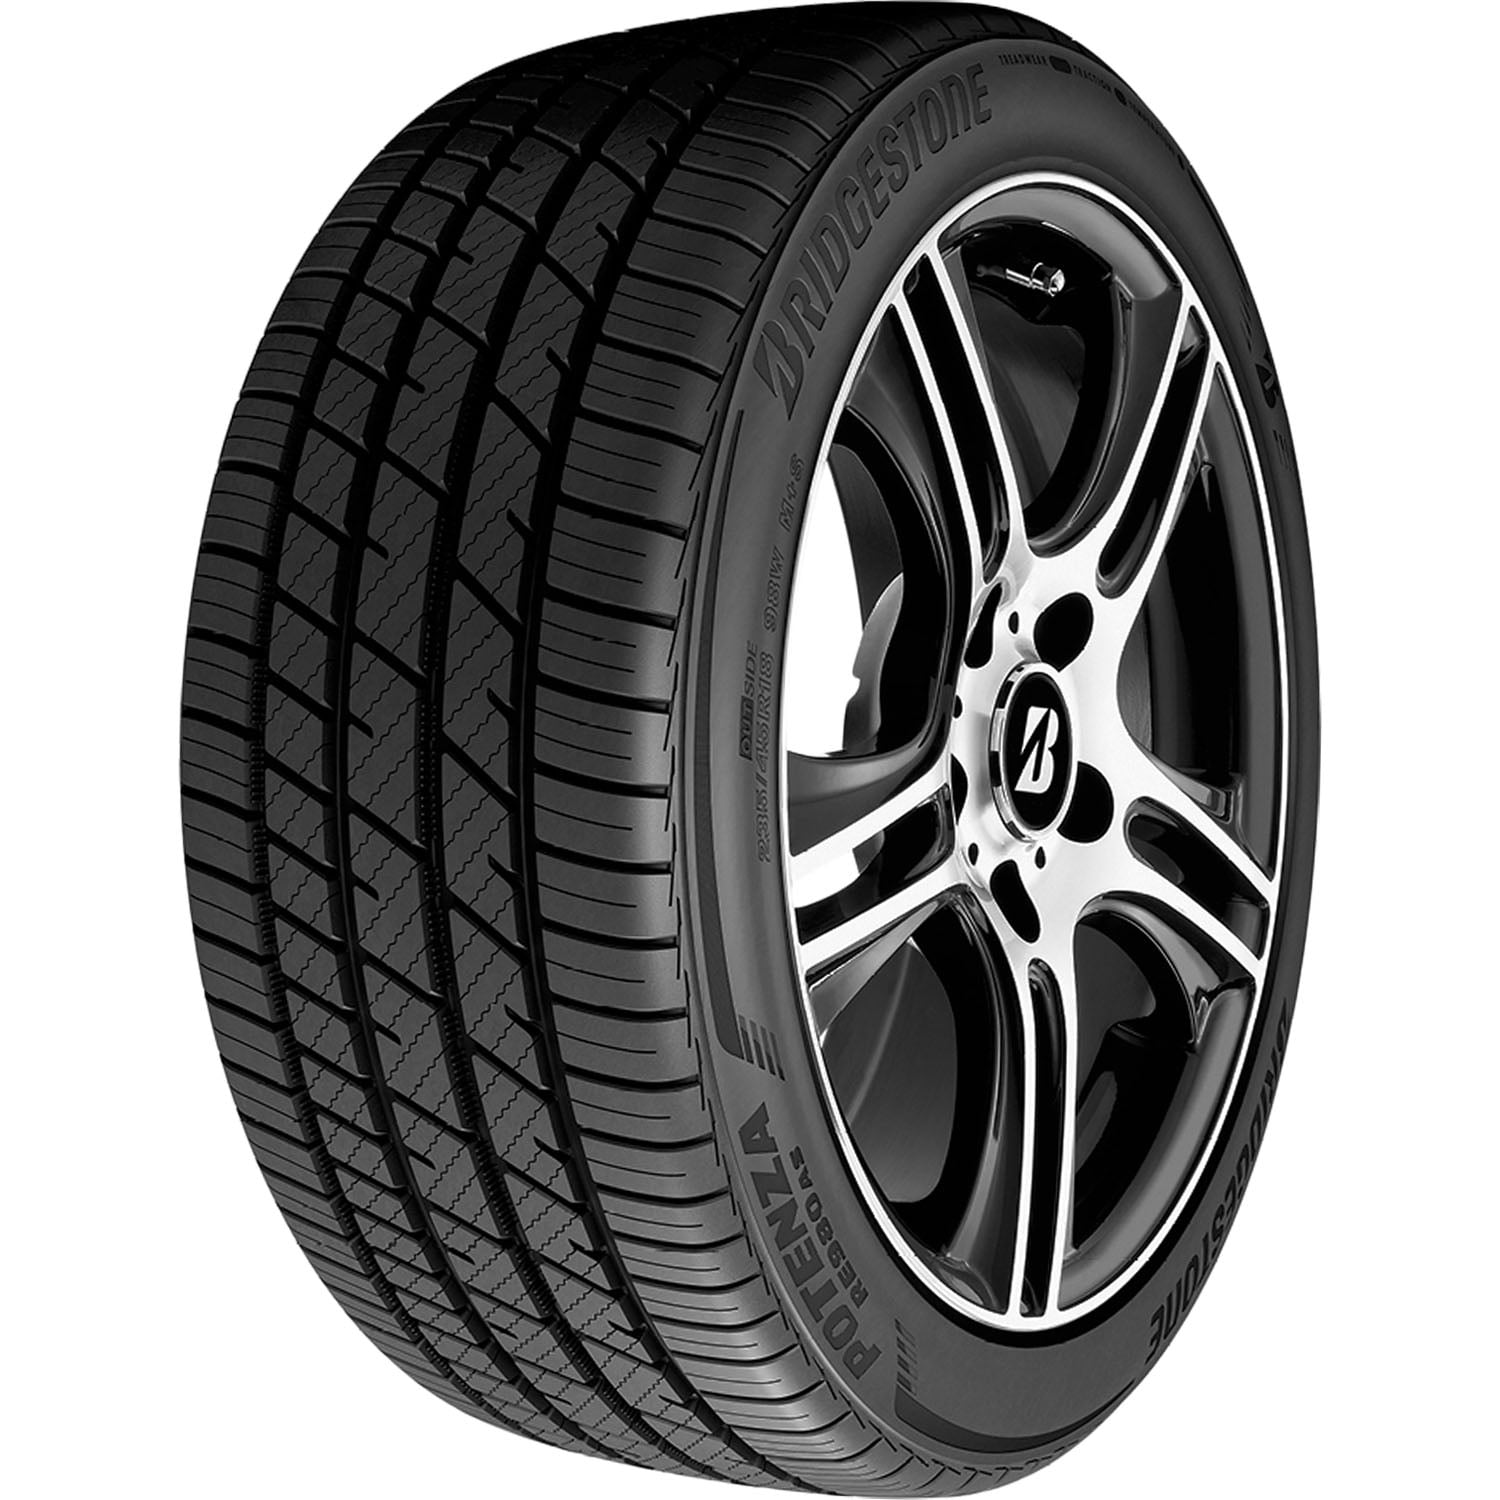 Bridgestone Potenza RE980AS All Season 245/45R18 100W XL Passenger Tire  Fits: 2016-23 Chevrolet Malibu LT, 2009-14 Acura TL SH-AWD